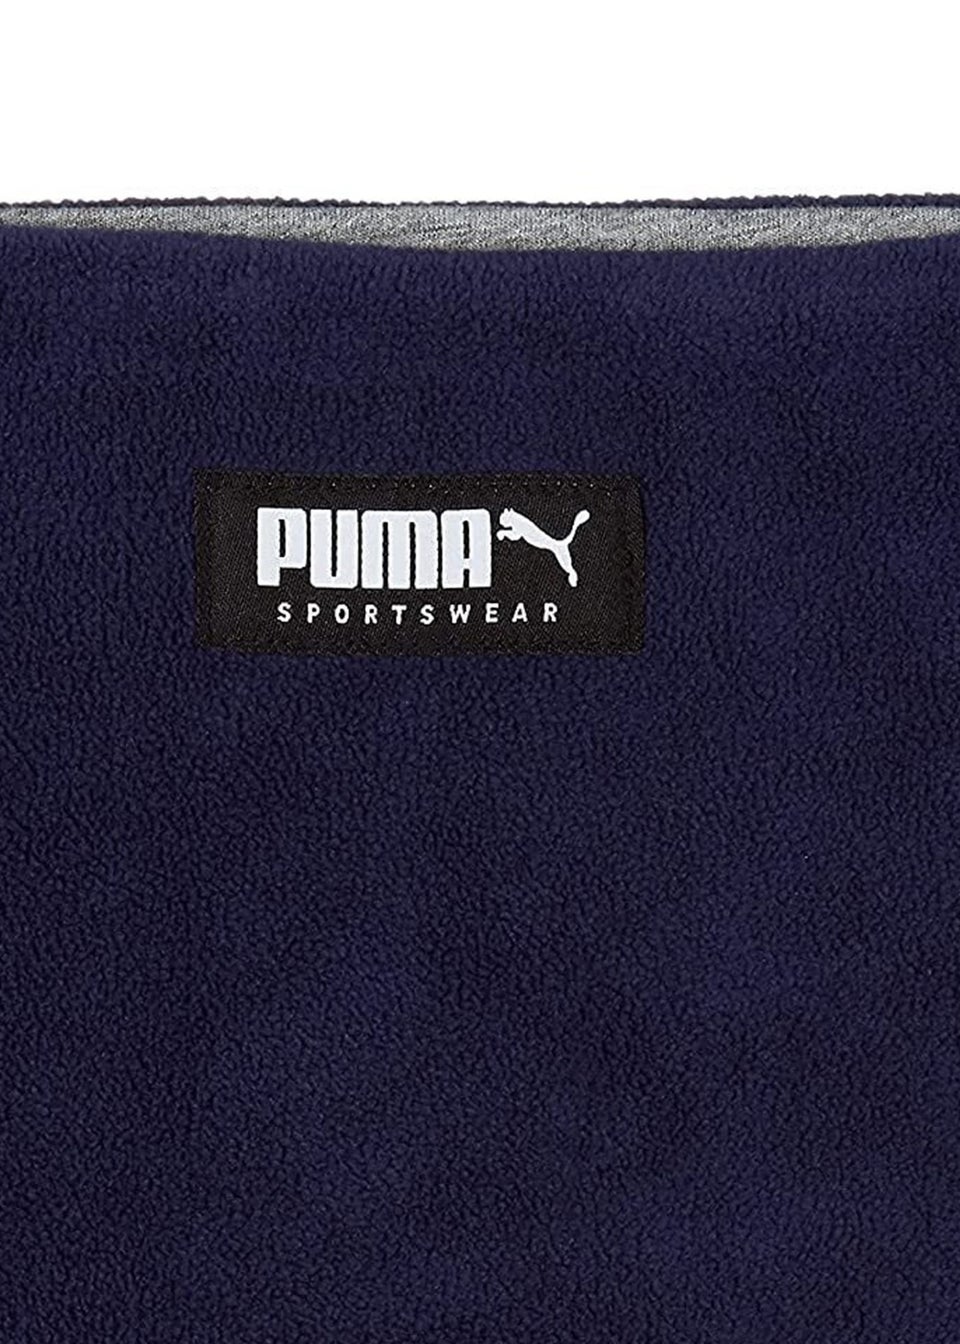 Puma Navy Fleece Reversible Neck Warmer